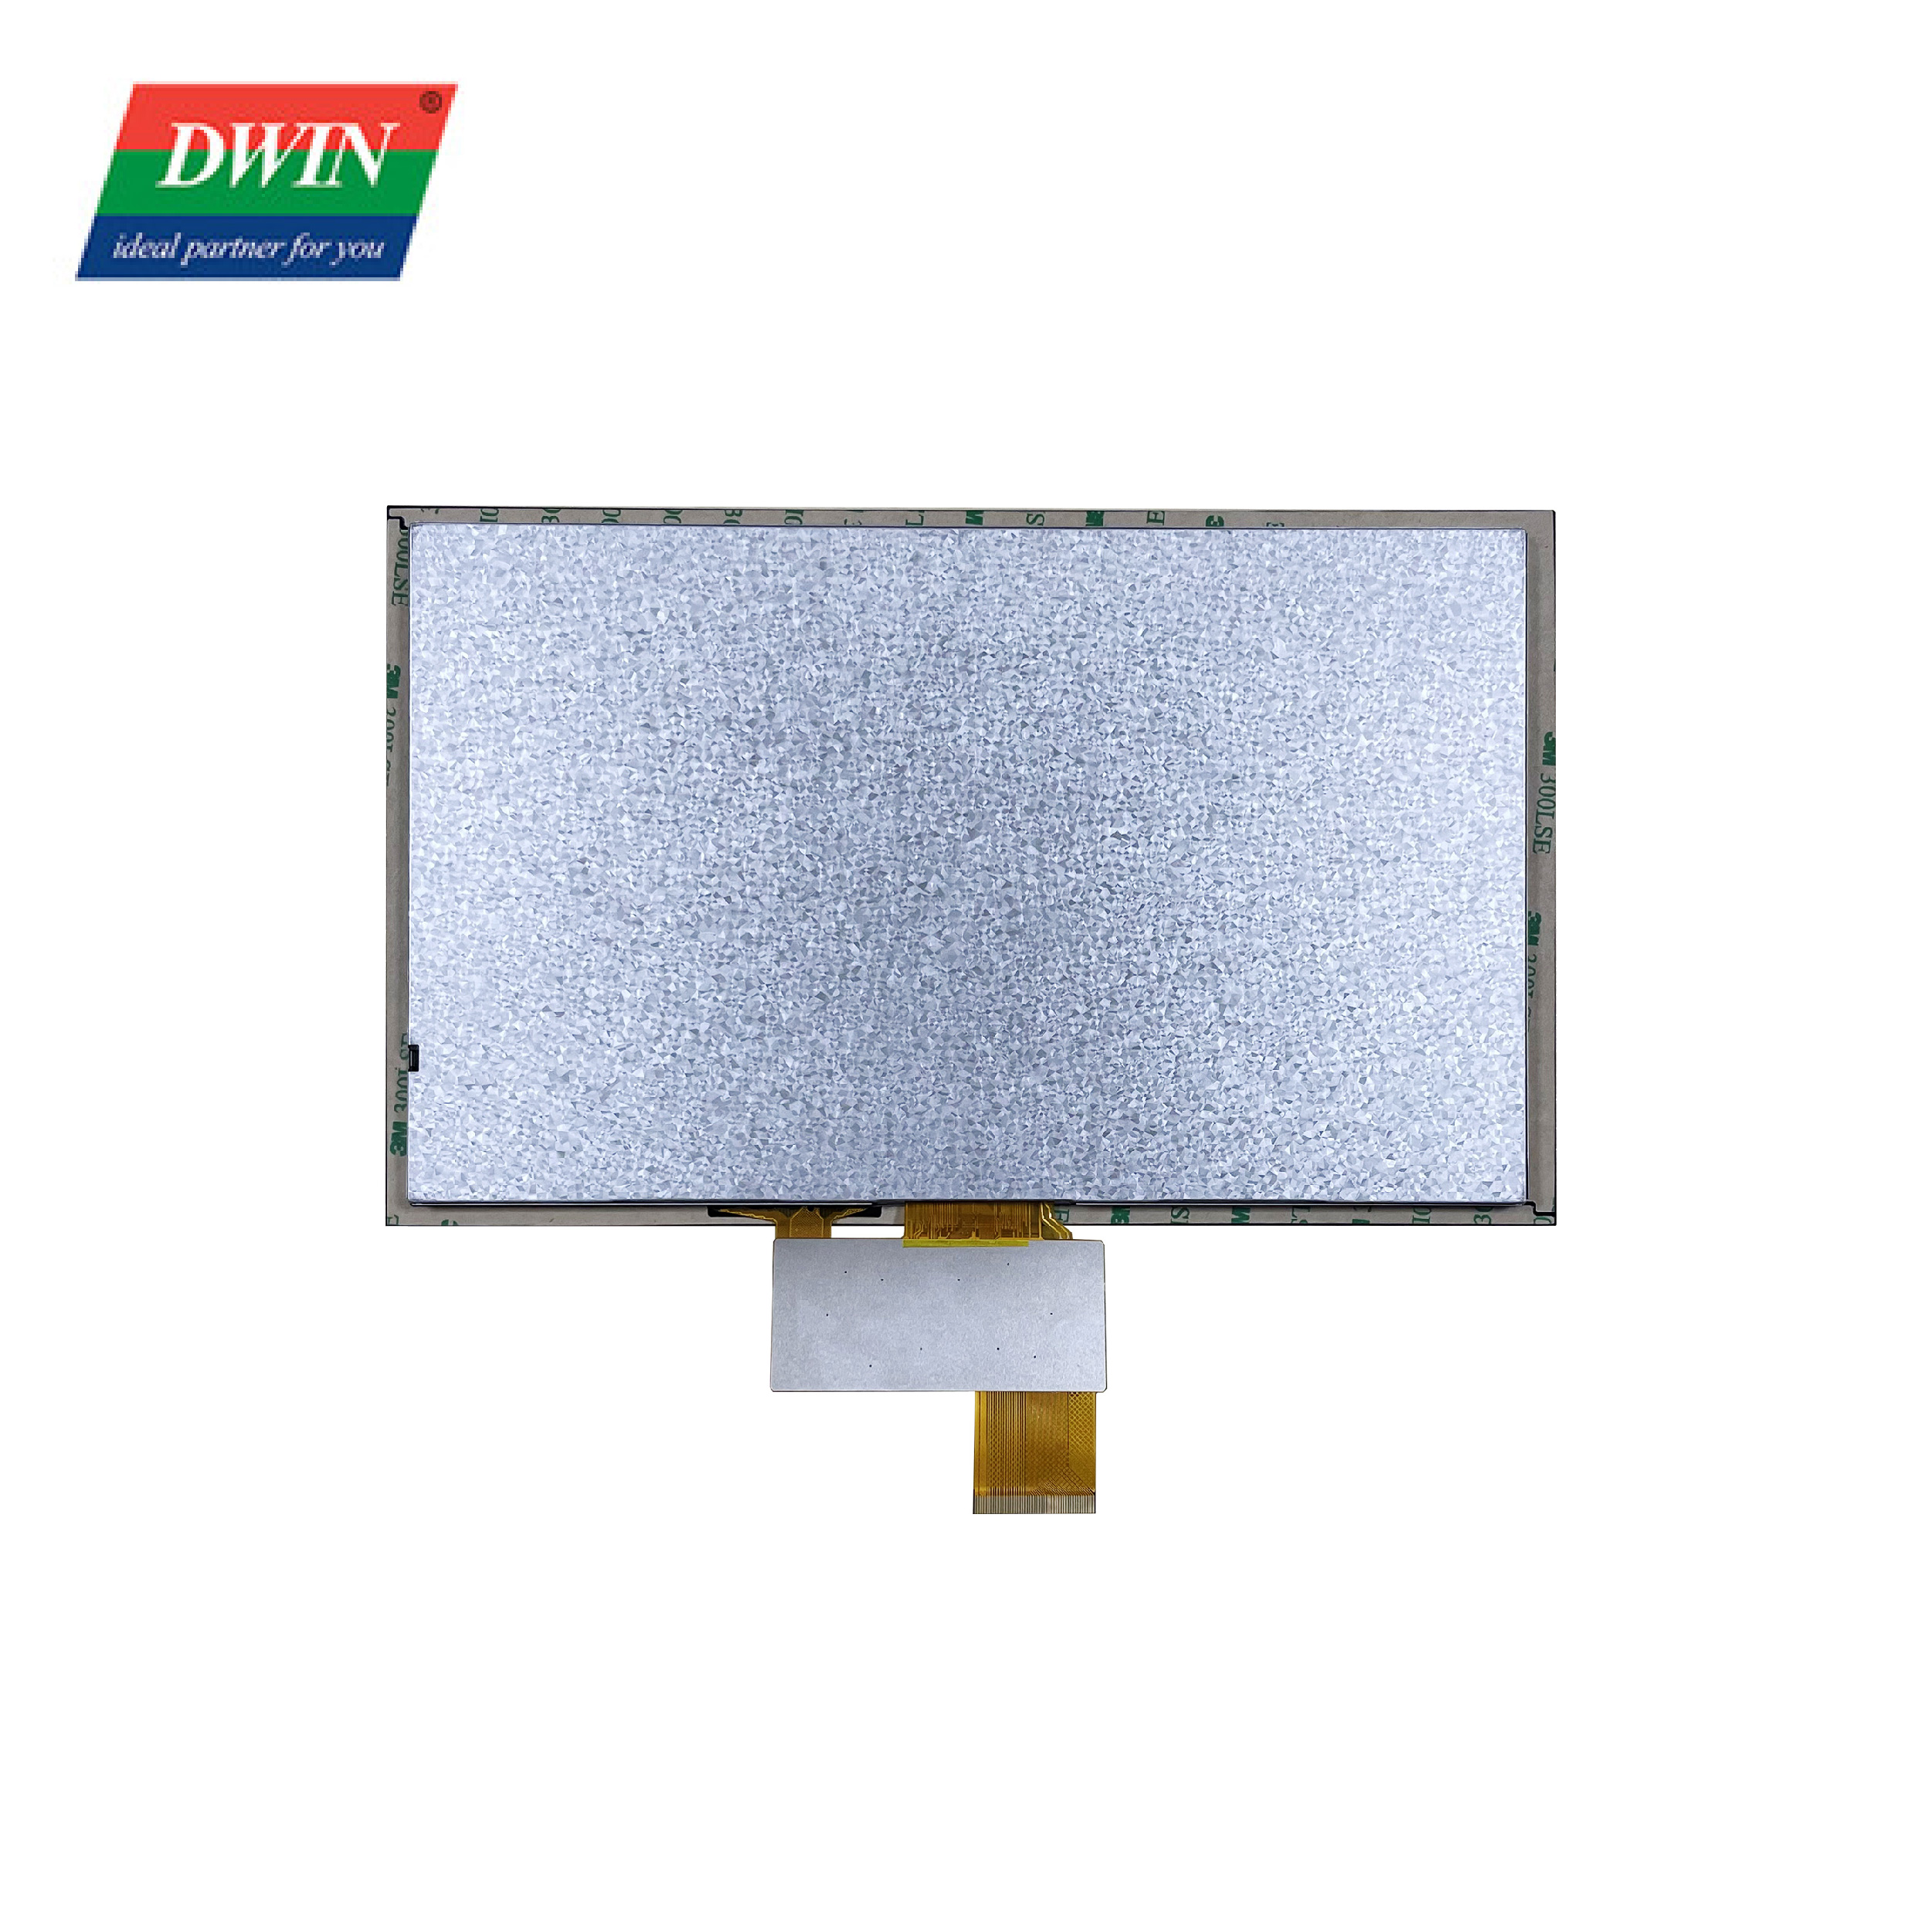 10,1 inčni COF ekran osjetljiv na dodir Model: DMG10600F101_01 (COF serija)